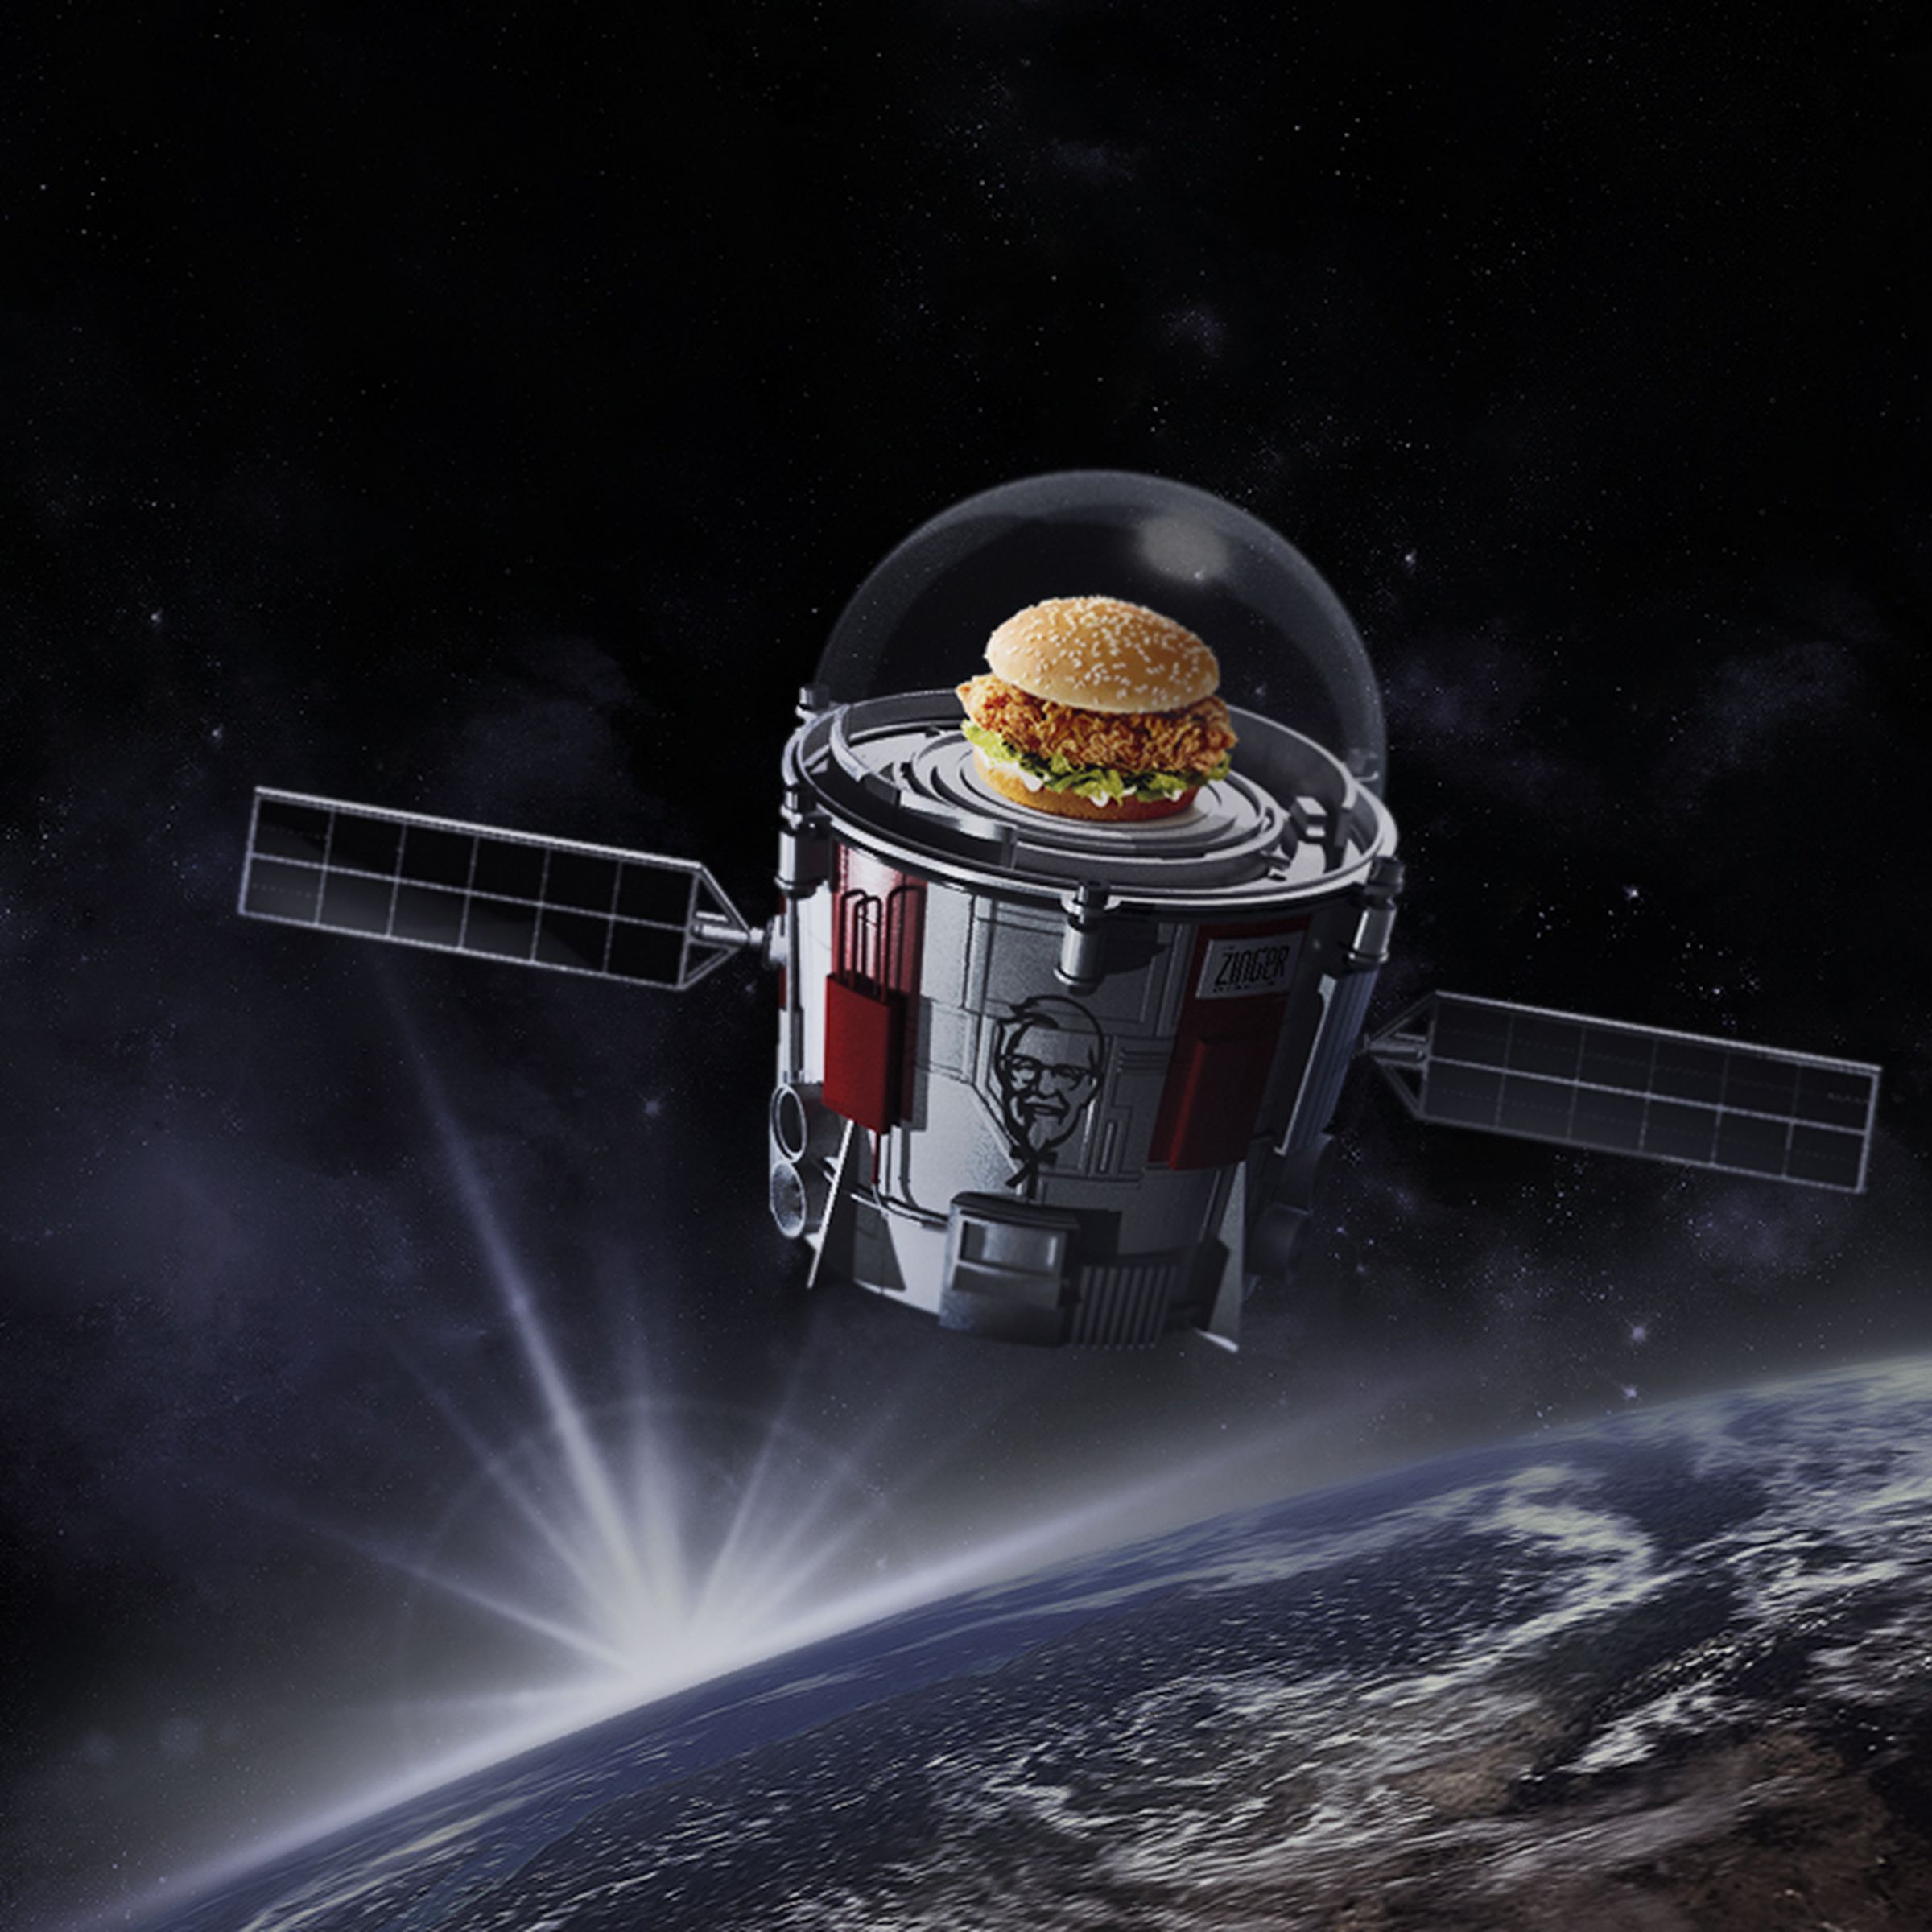 The KFC sandwich if it were an astronaut.